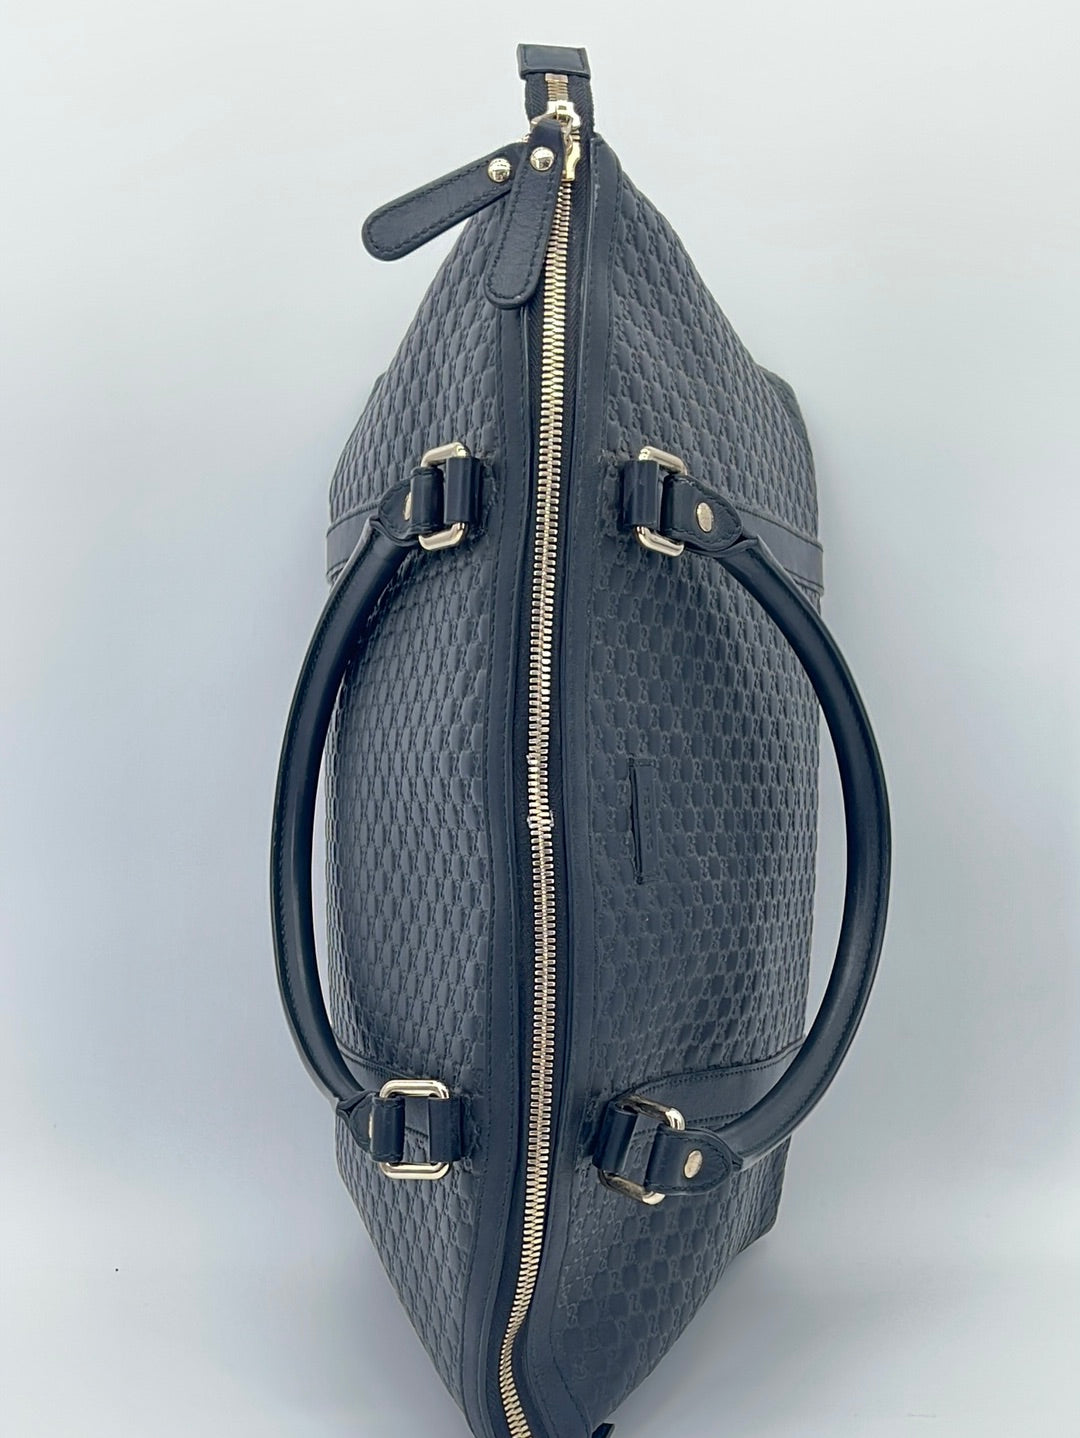 Gucci Black Leather Microguccissima Medium Dome Satchel Bag